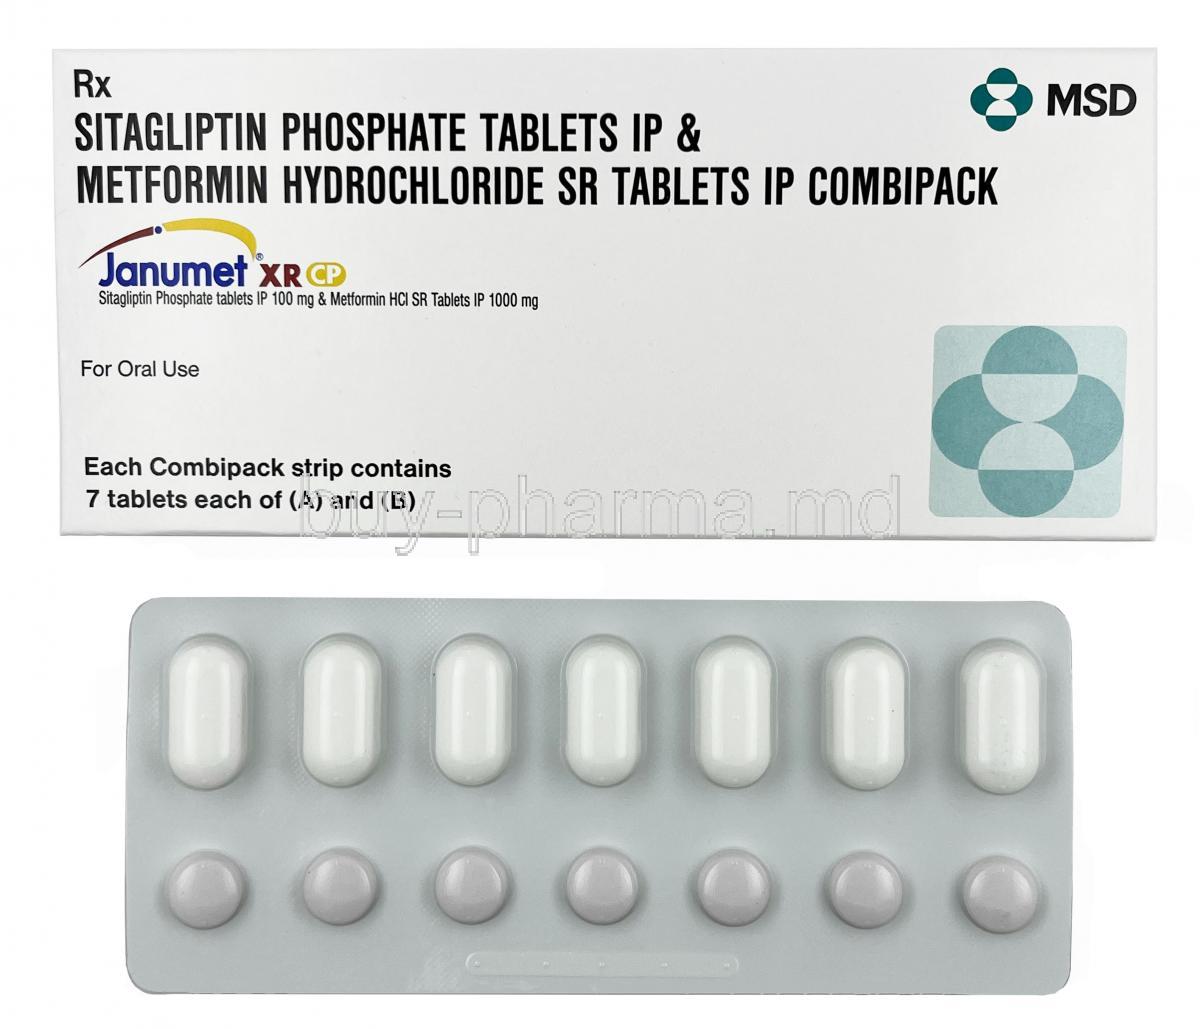 Janumet XR CP, Sitagliptin 100 mg x 7 tablets, Metformin 1000 mg x 7 tablets (Combipack), MSD, Box, Blisterpack